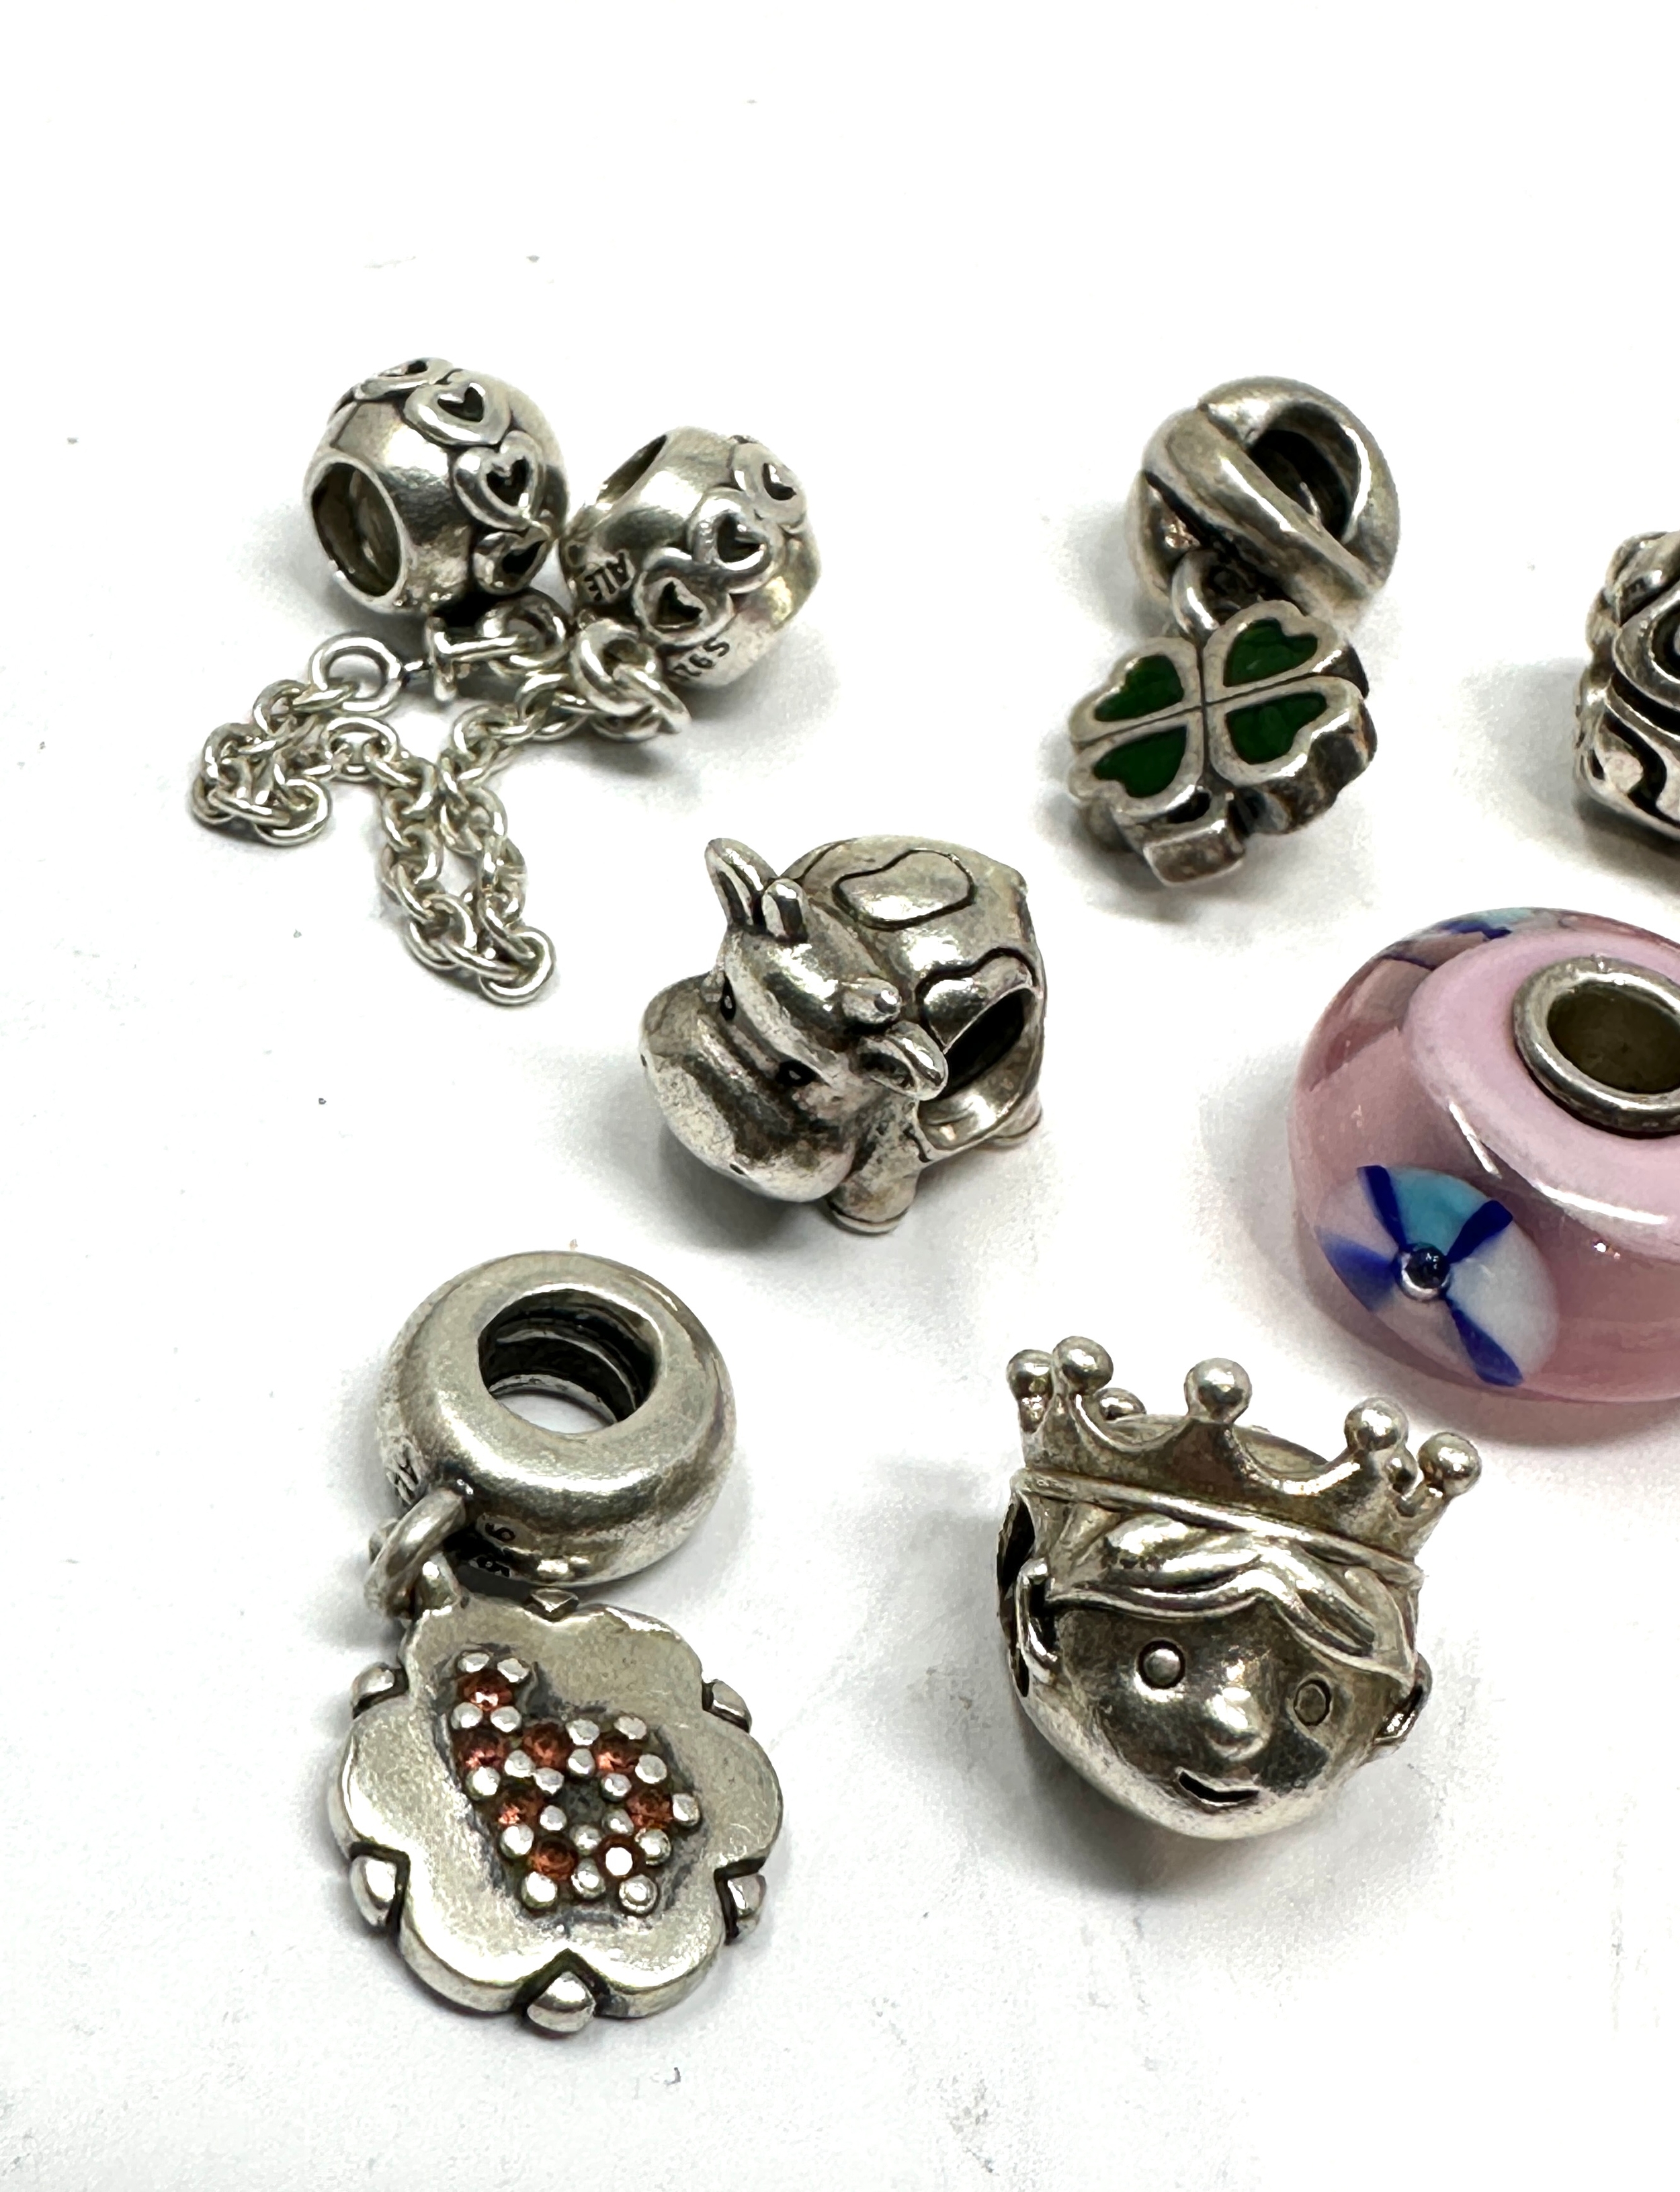 8 silver pandora charms - Image 2 of 3